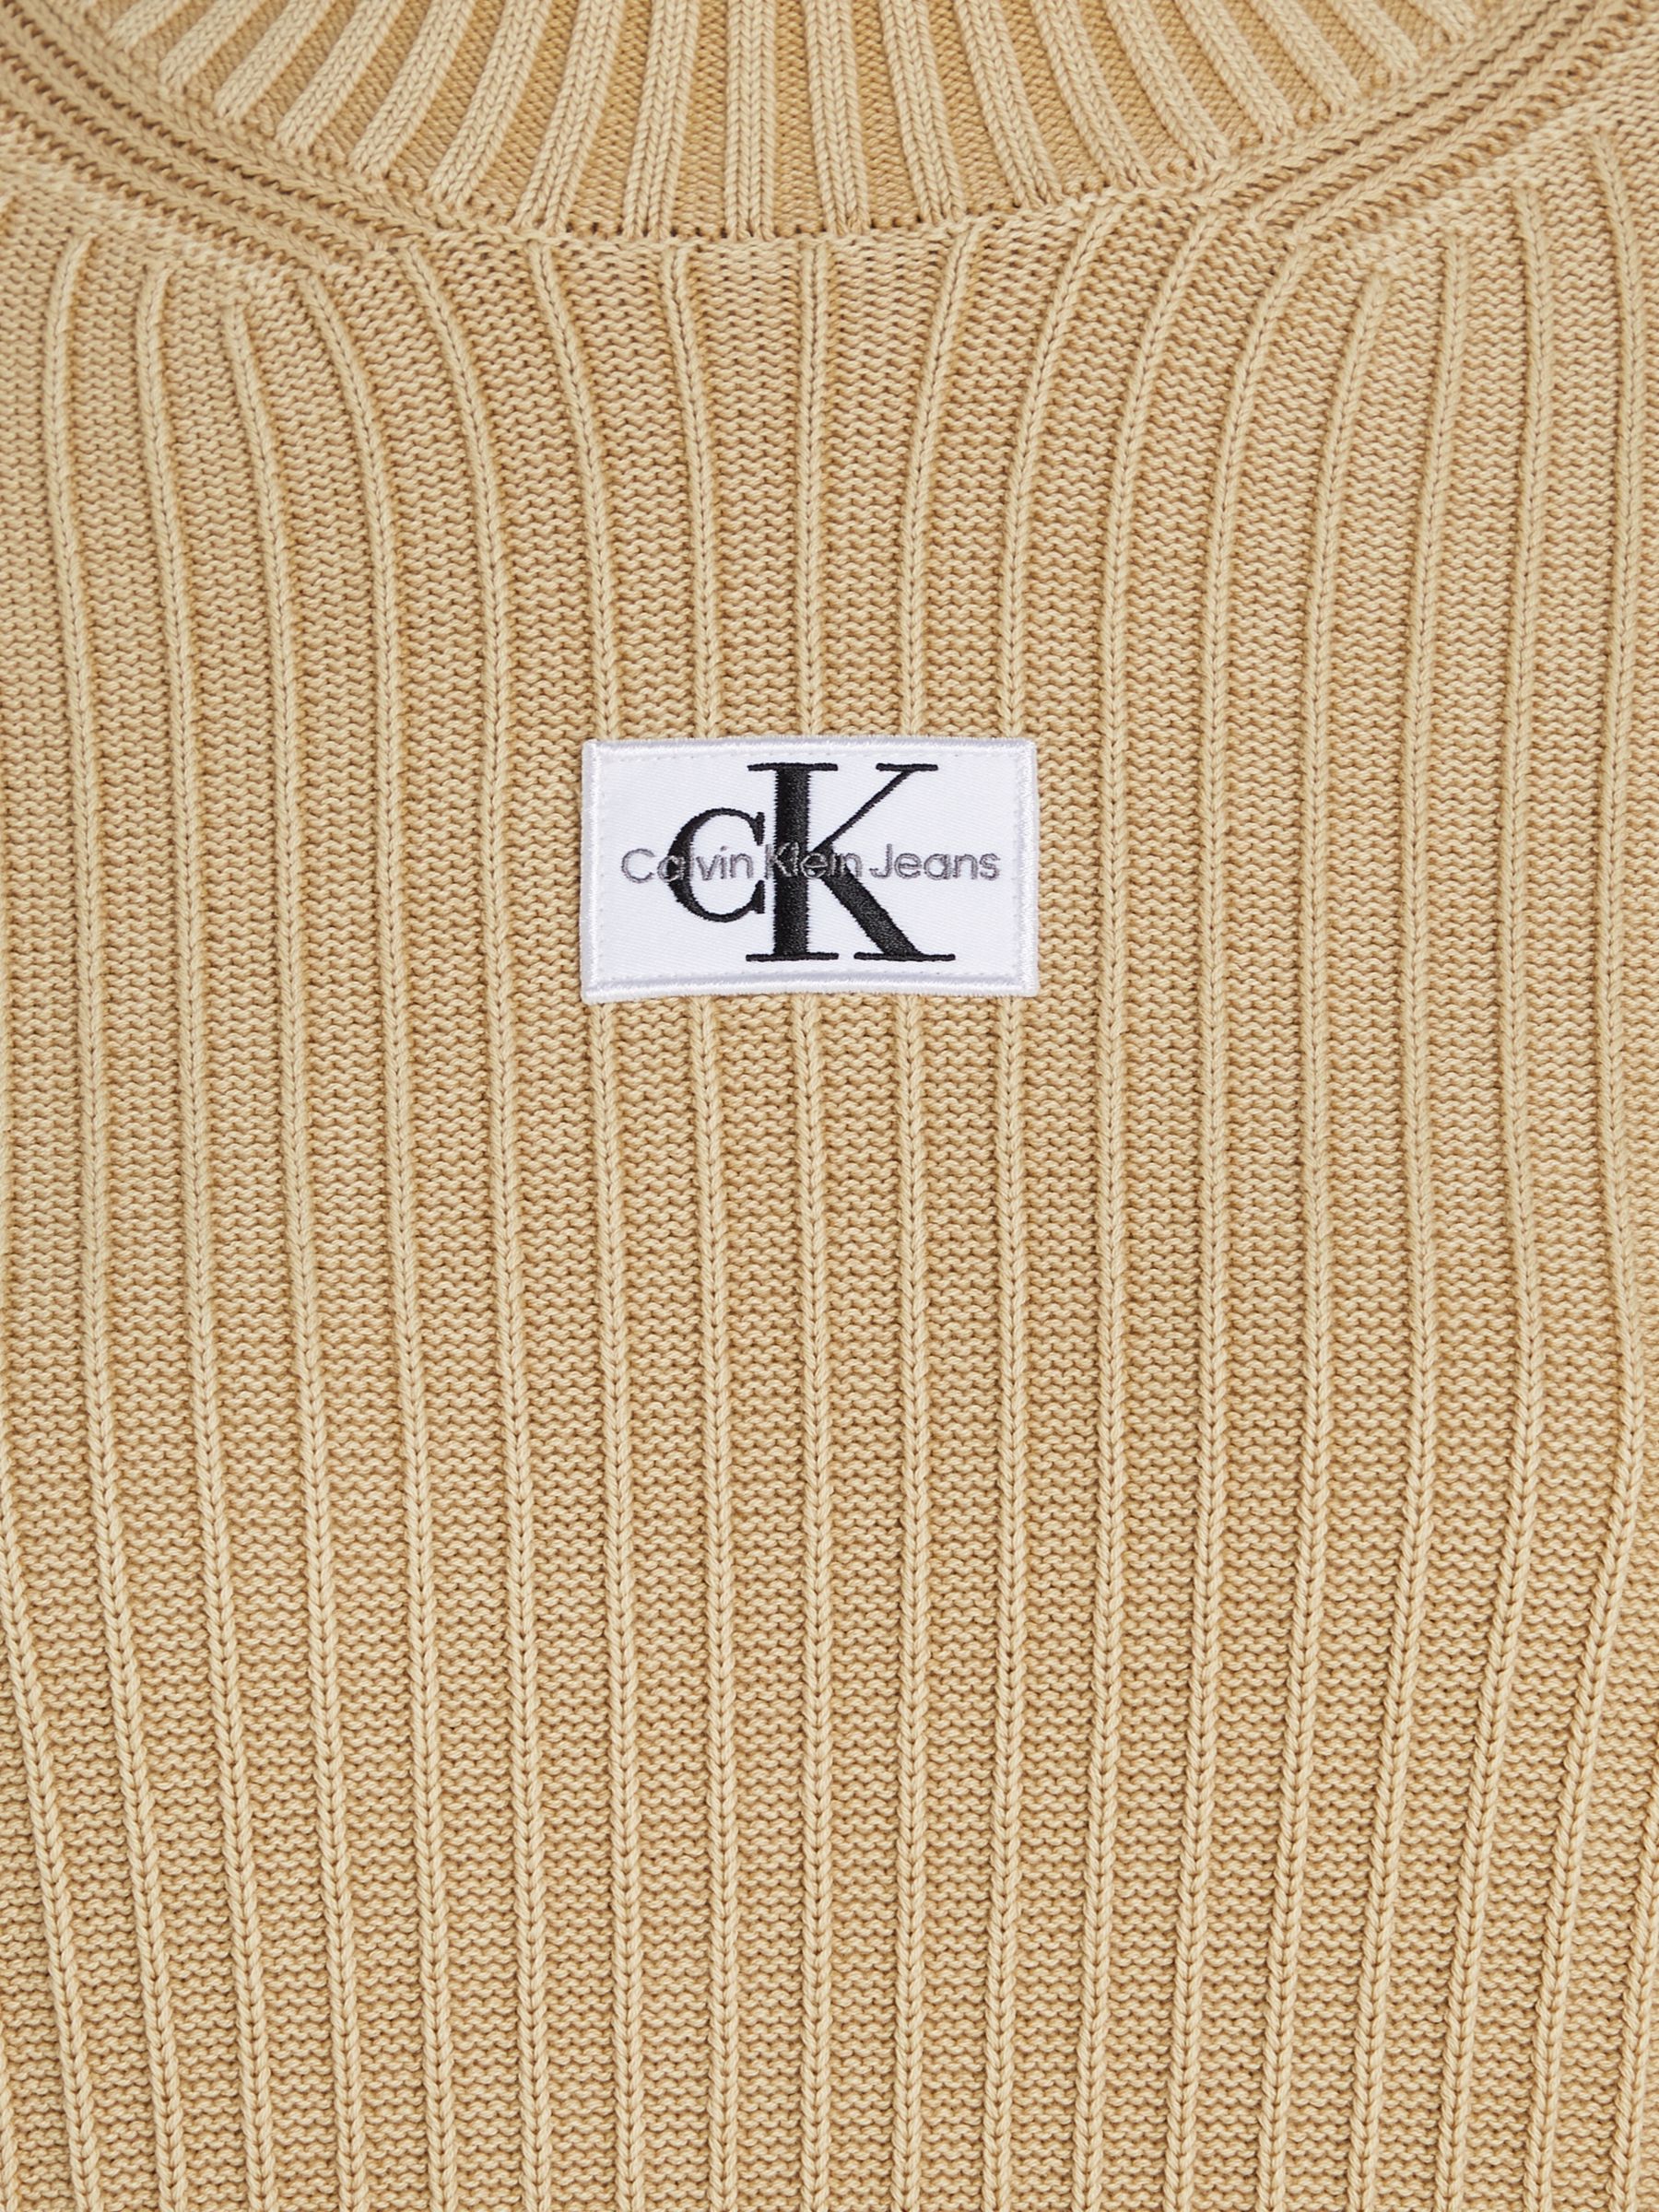 Calvin Klein Jeans Woven Label Jumper Dress, Brown, M